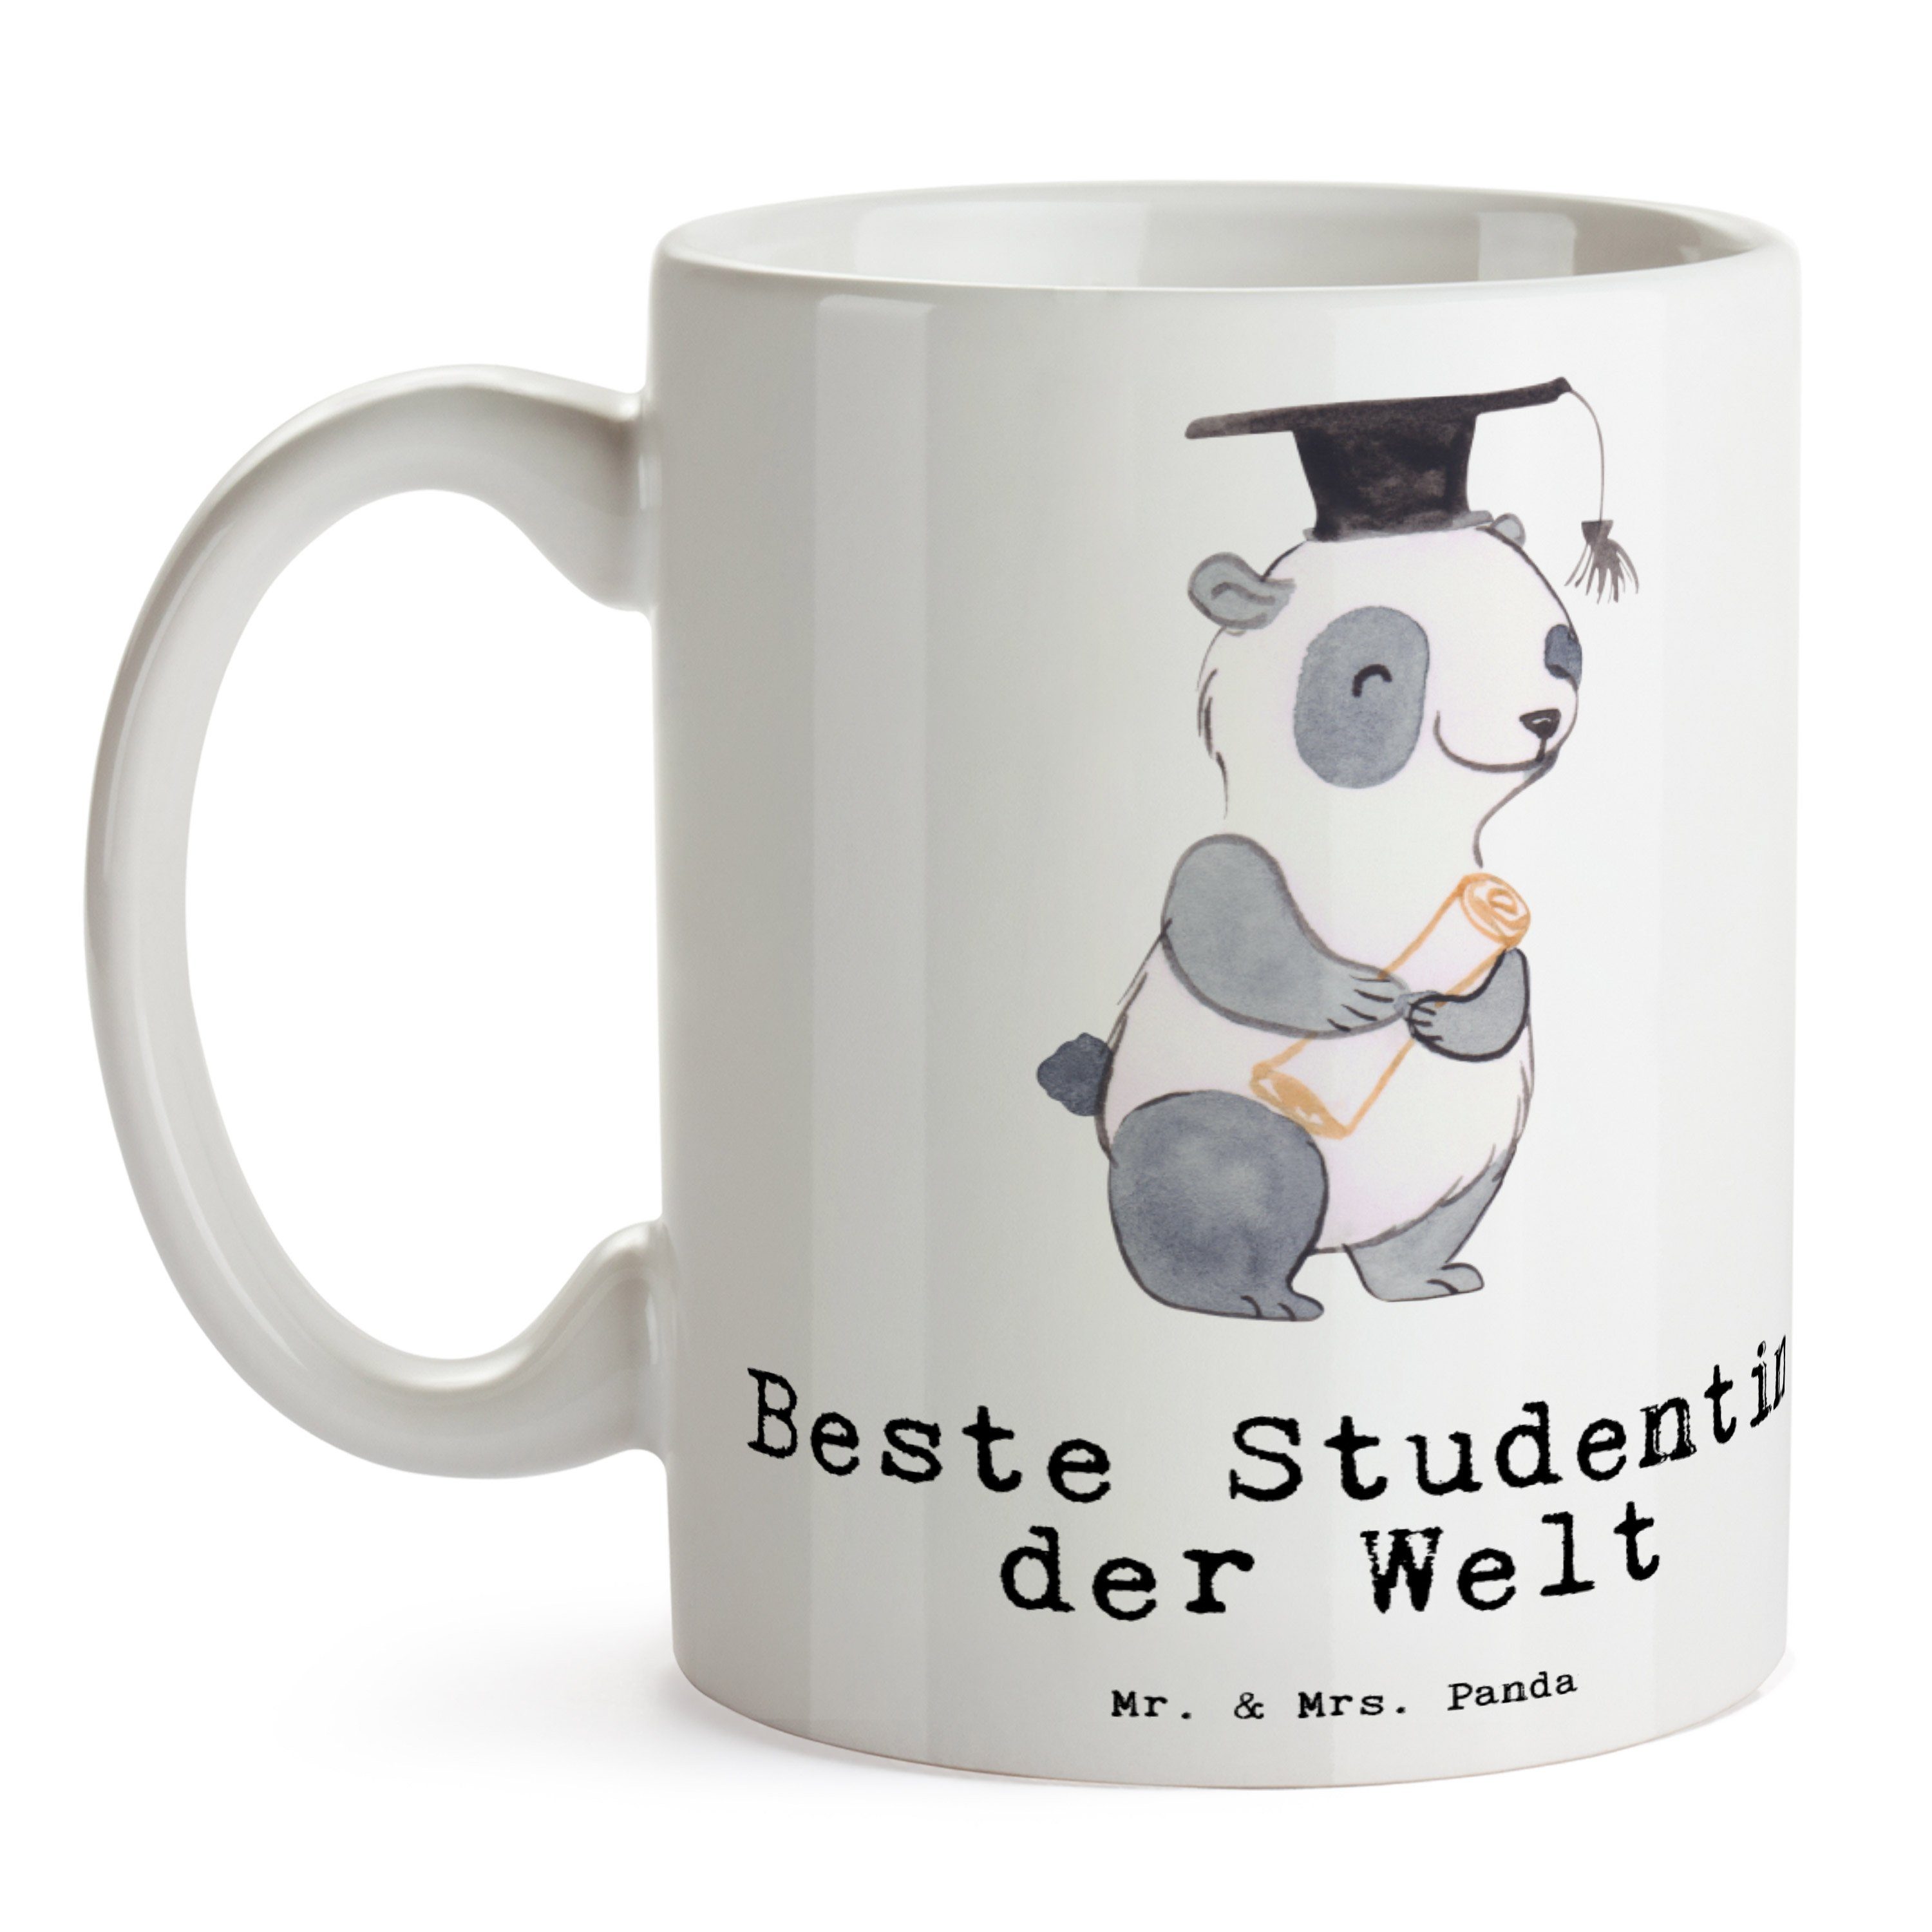 Mr. & Mrs. Becher, Geschenk, Kaffeetasse, Studentin Panda Tasse Büro, Universität, Studenten, - Panda Alumni, Geschenkidee, der Dankeschön, Tee, - Welt Beste Weiß Keramik Bedanken